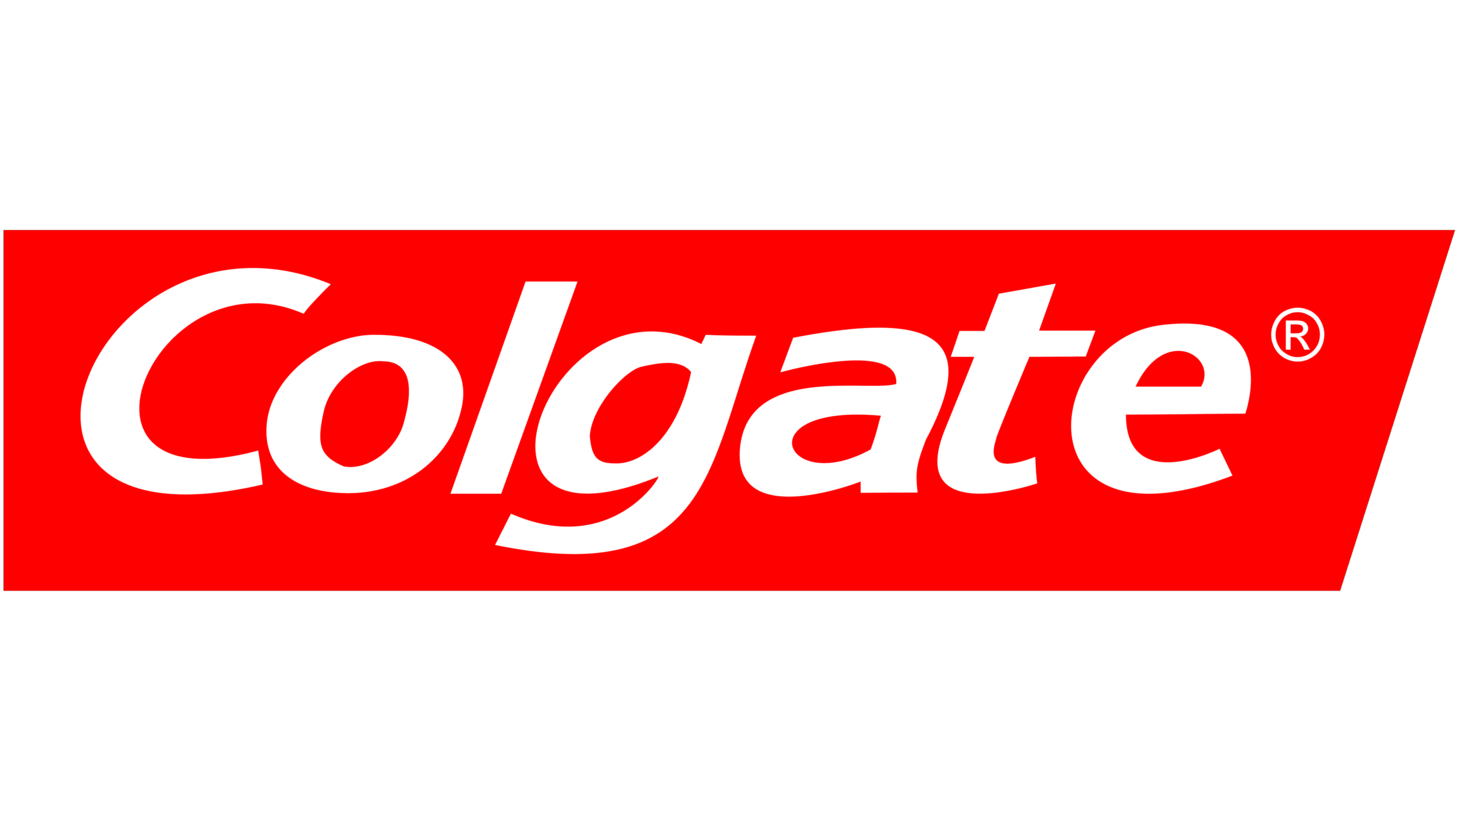 Colgate sign 2001 2004